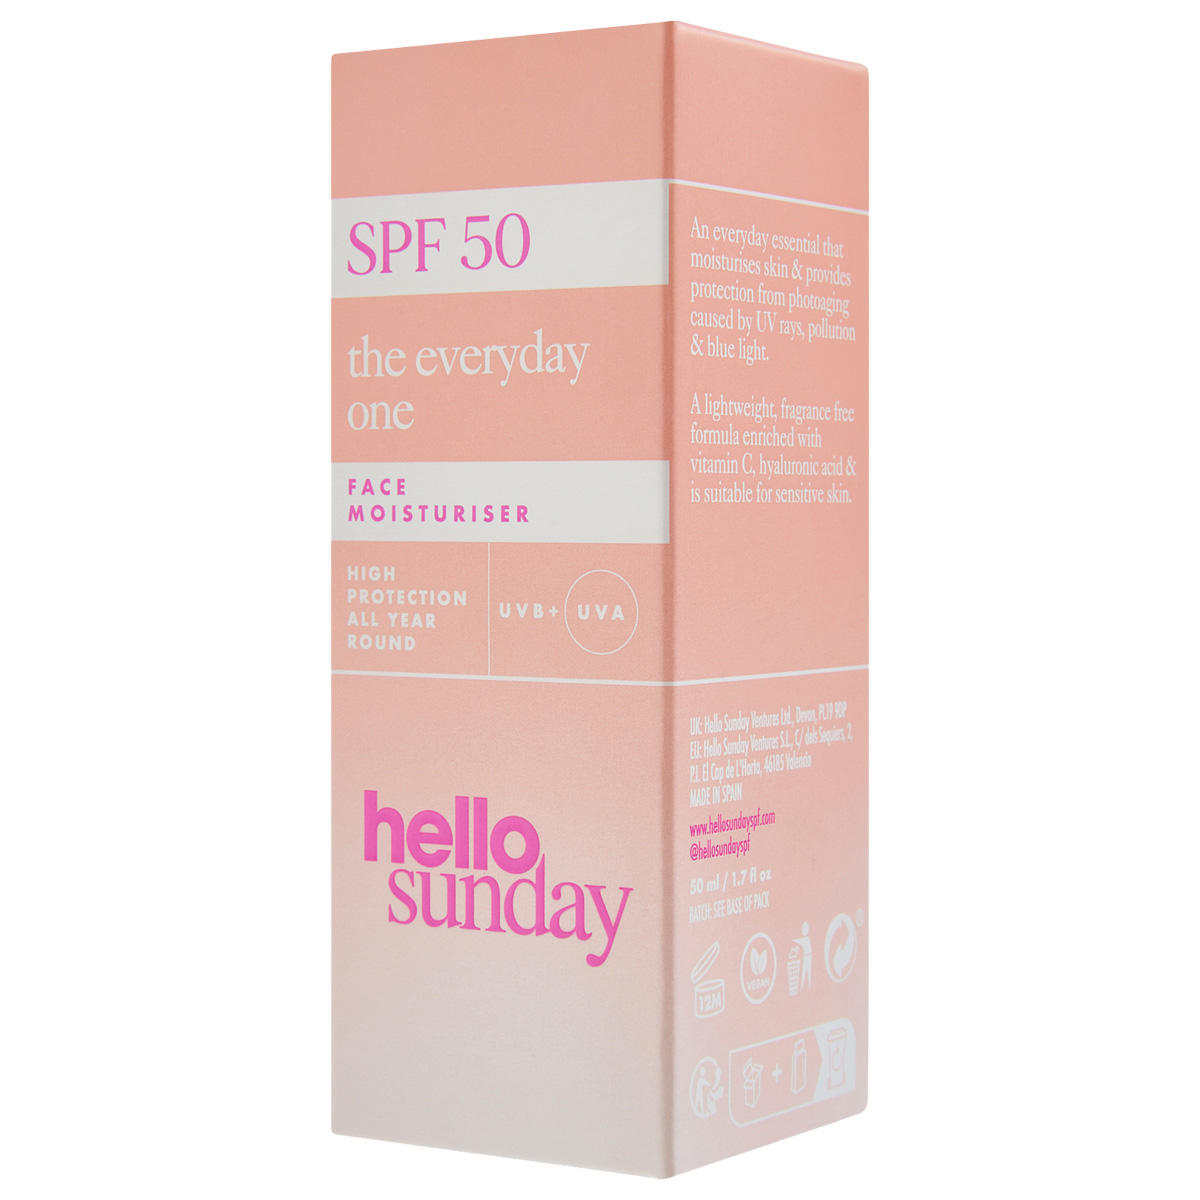 hello sunday the everyday one Face moisturiser SPF 50 50 ml - 3